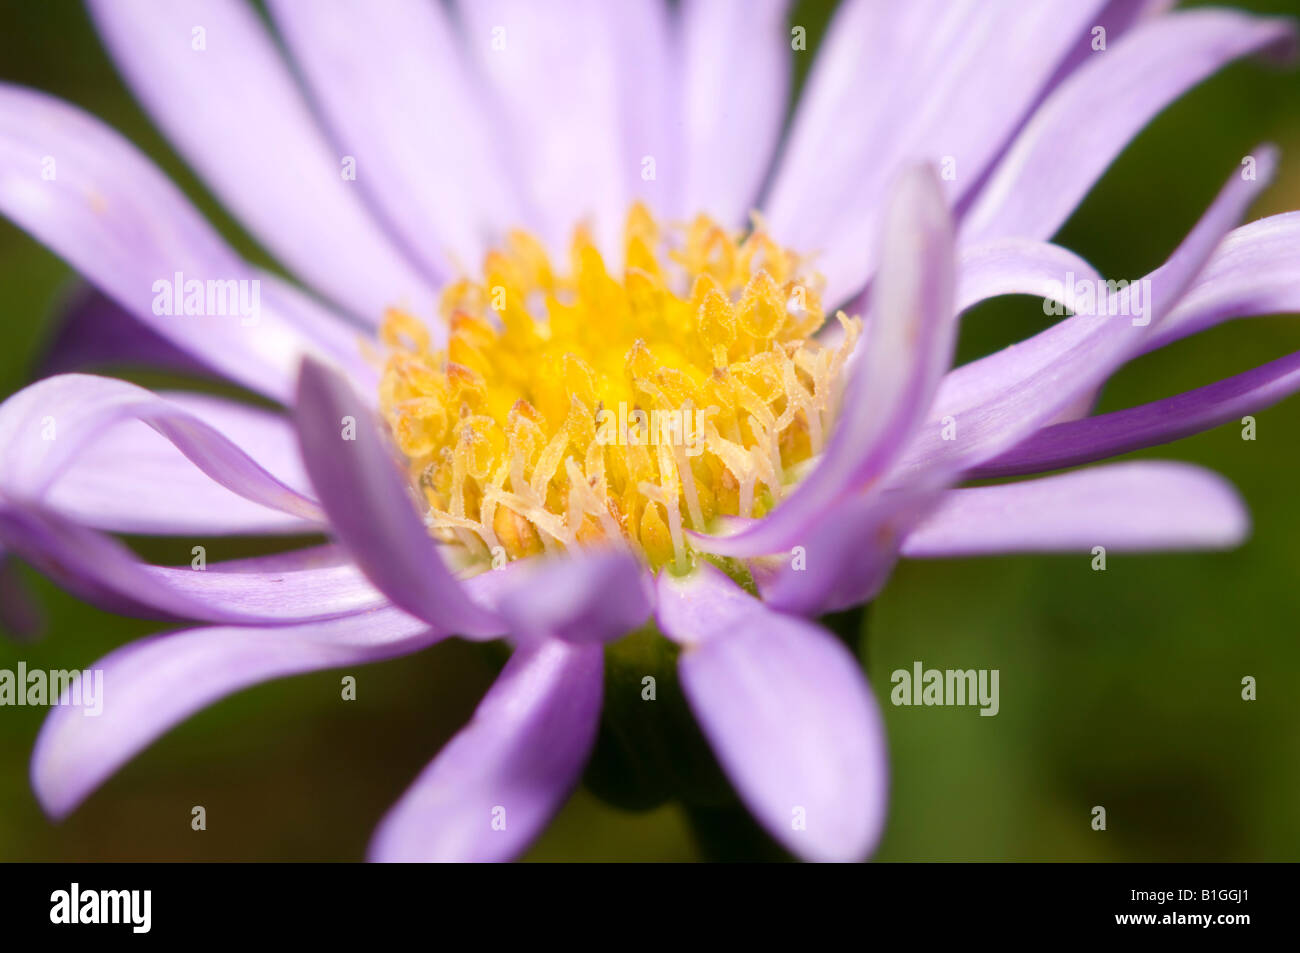 Native Australian purple daisy flower Stock Photo